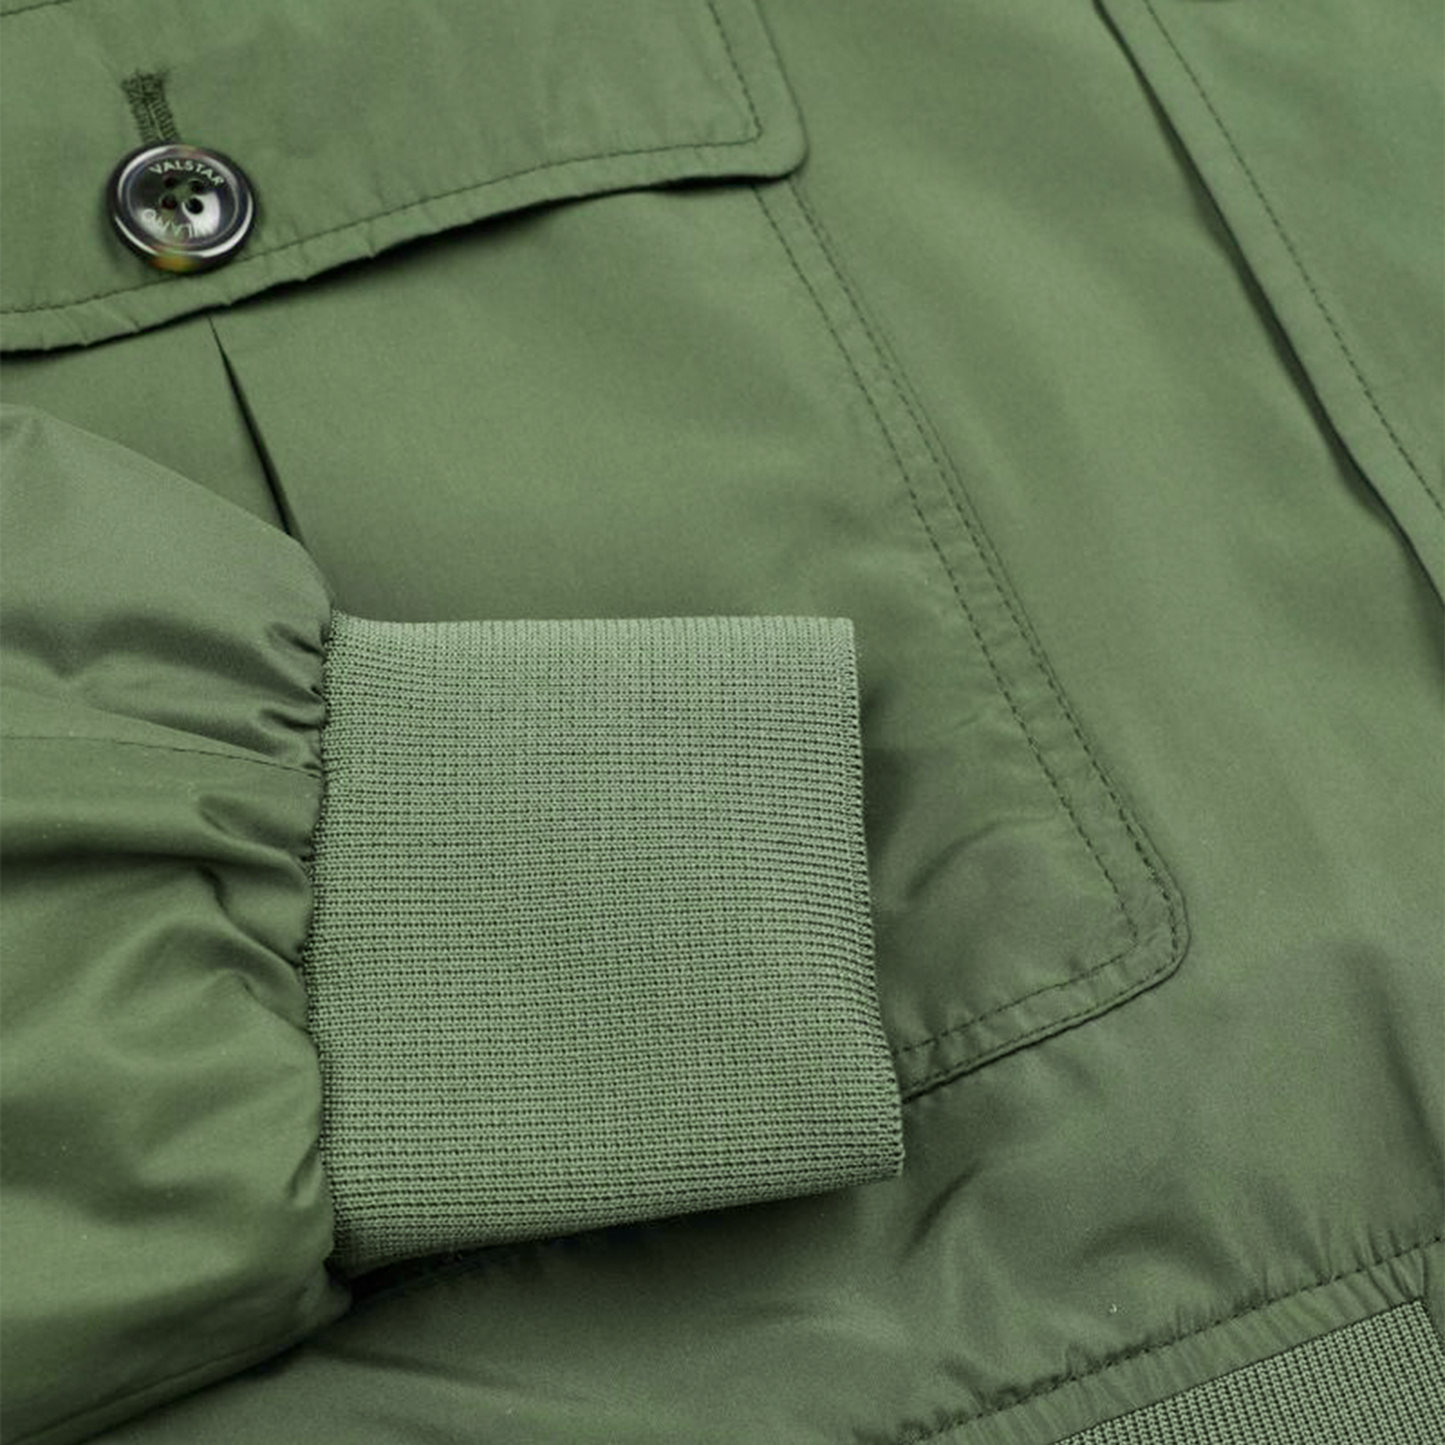 Valstarino Packable Jacket, Water-Repellent in Super Light Fabric - Green